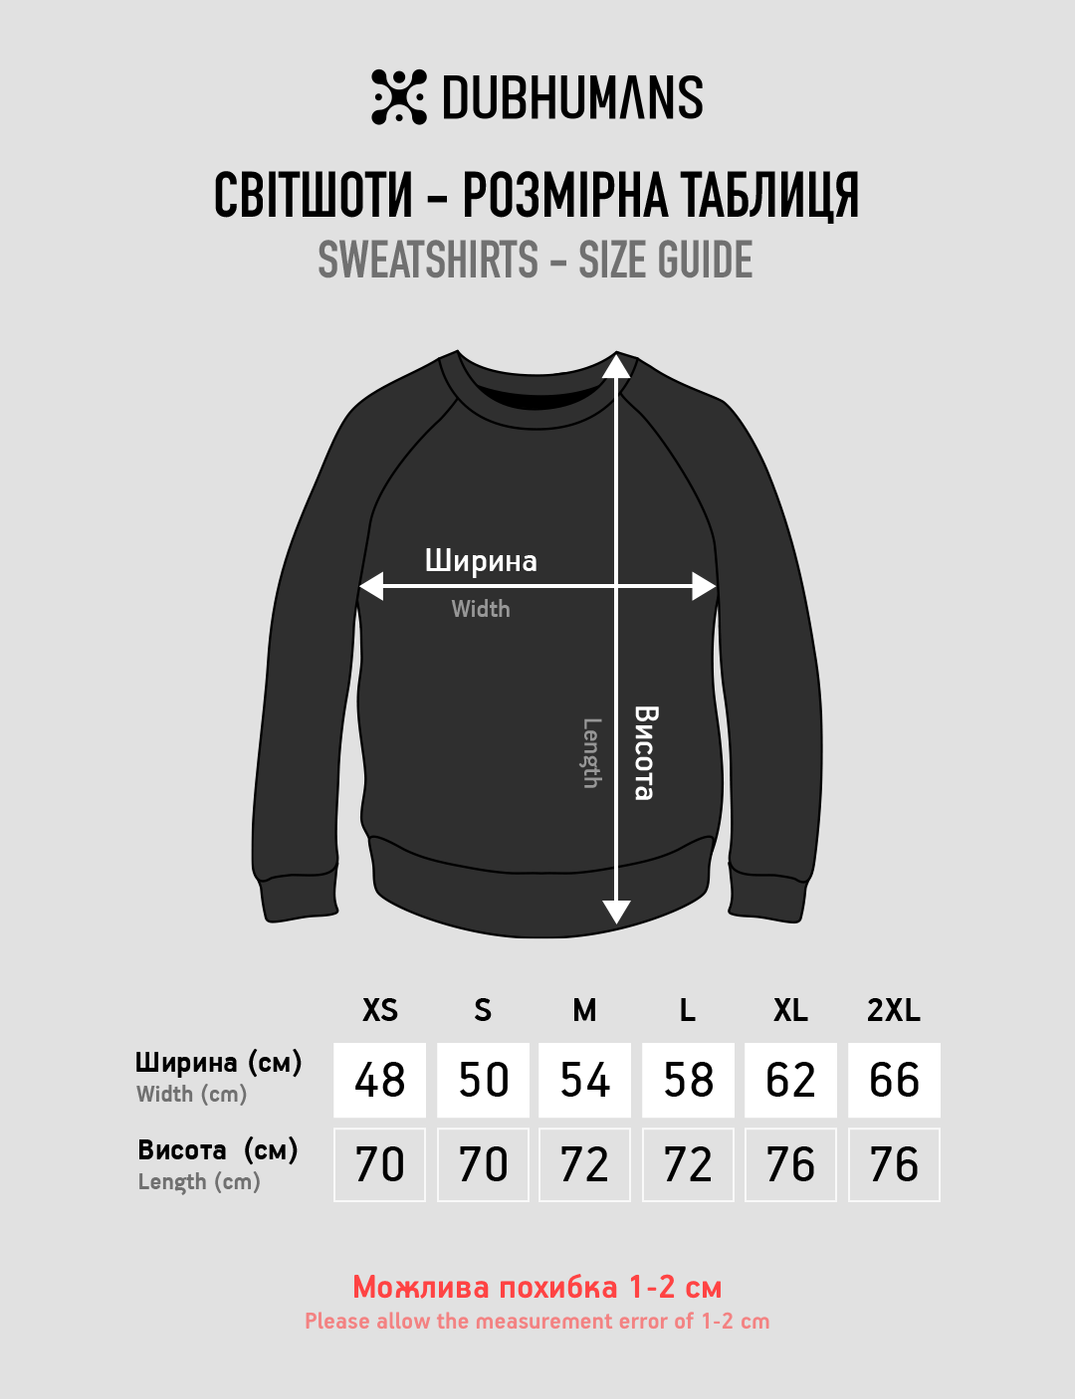 Men's Sweatshirt “Kherson Exodus”, Black, M